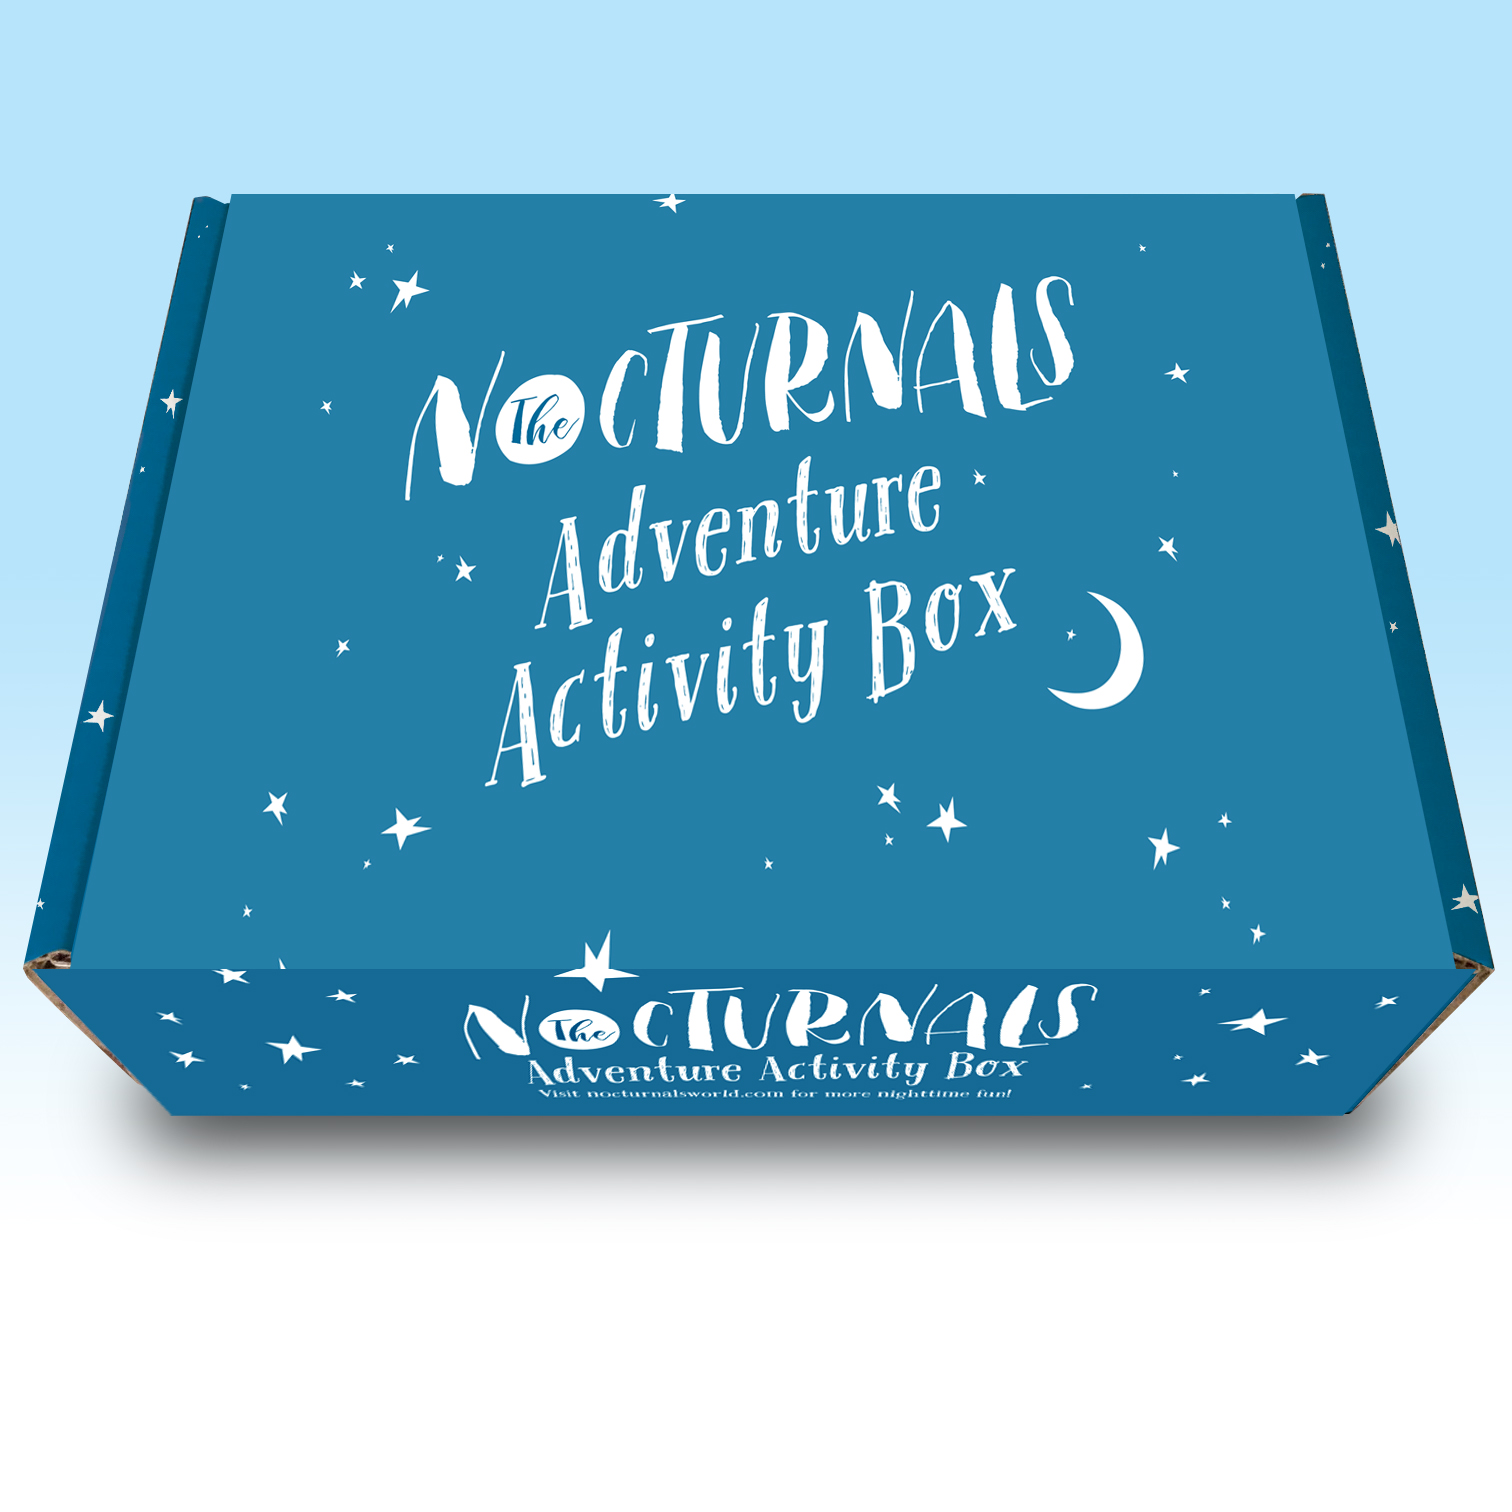 The Nocturnals Adventure Activity Box